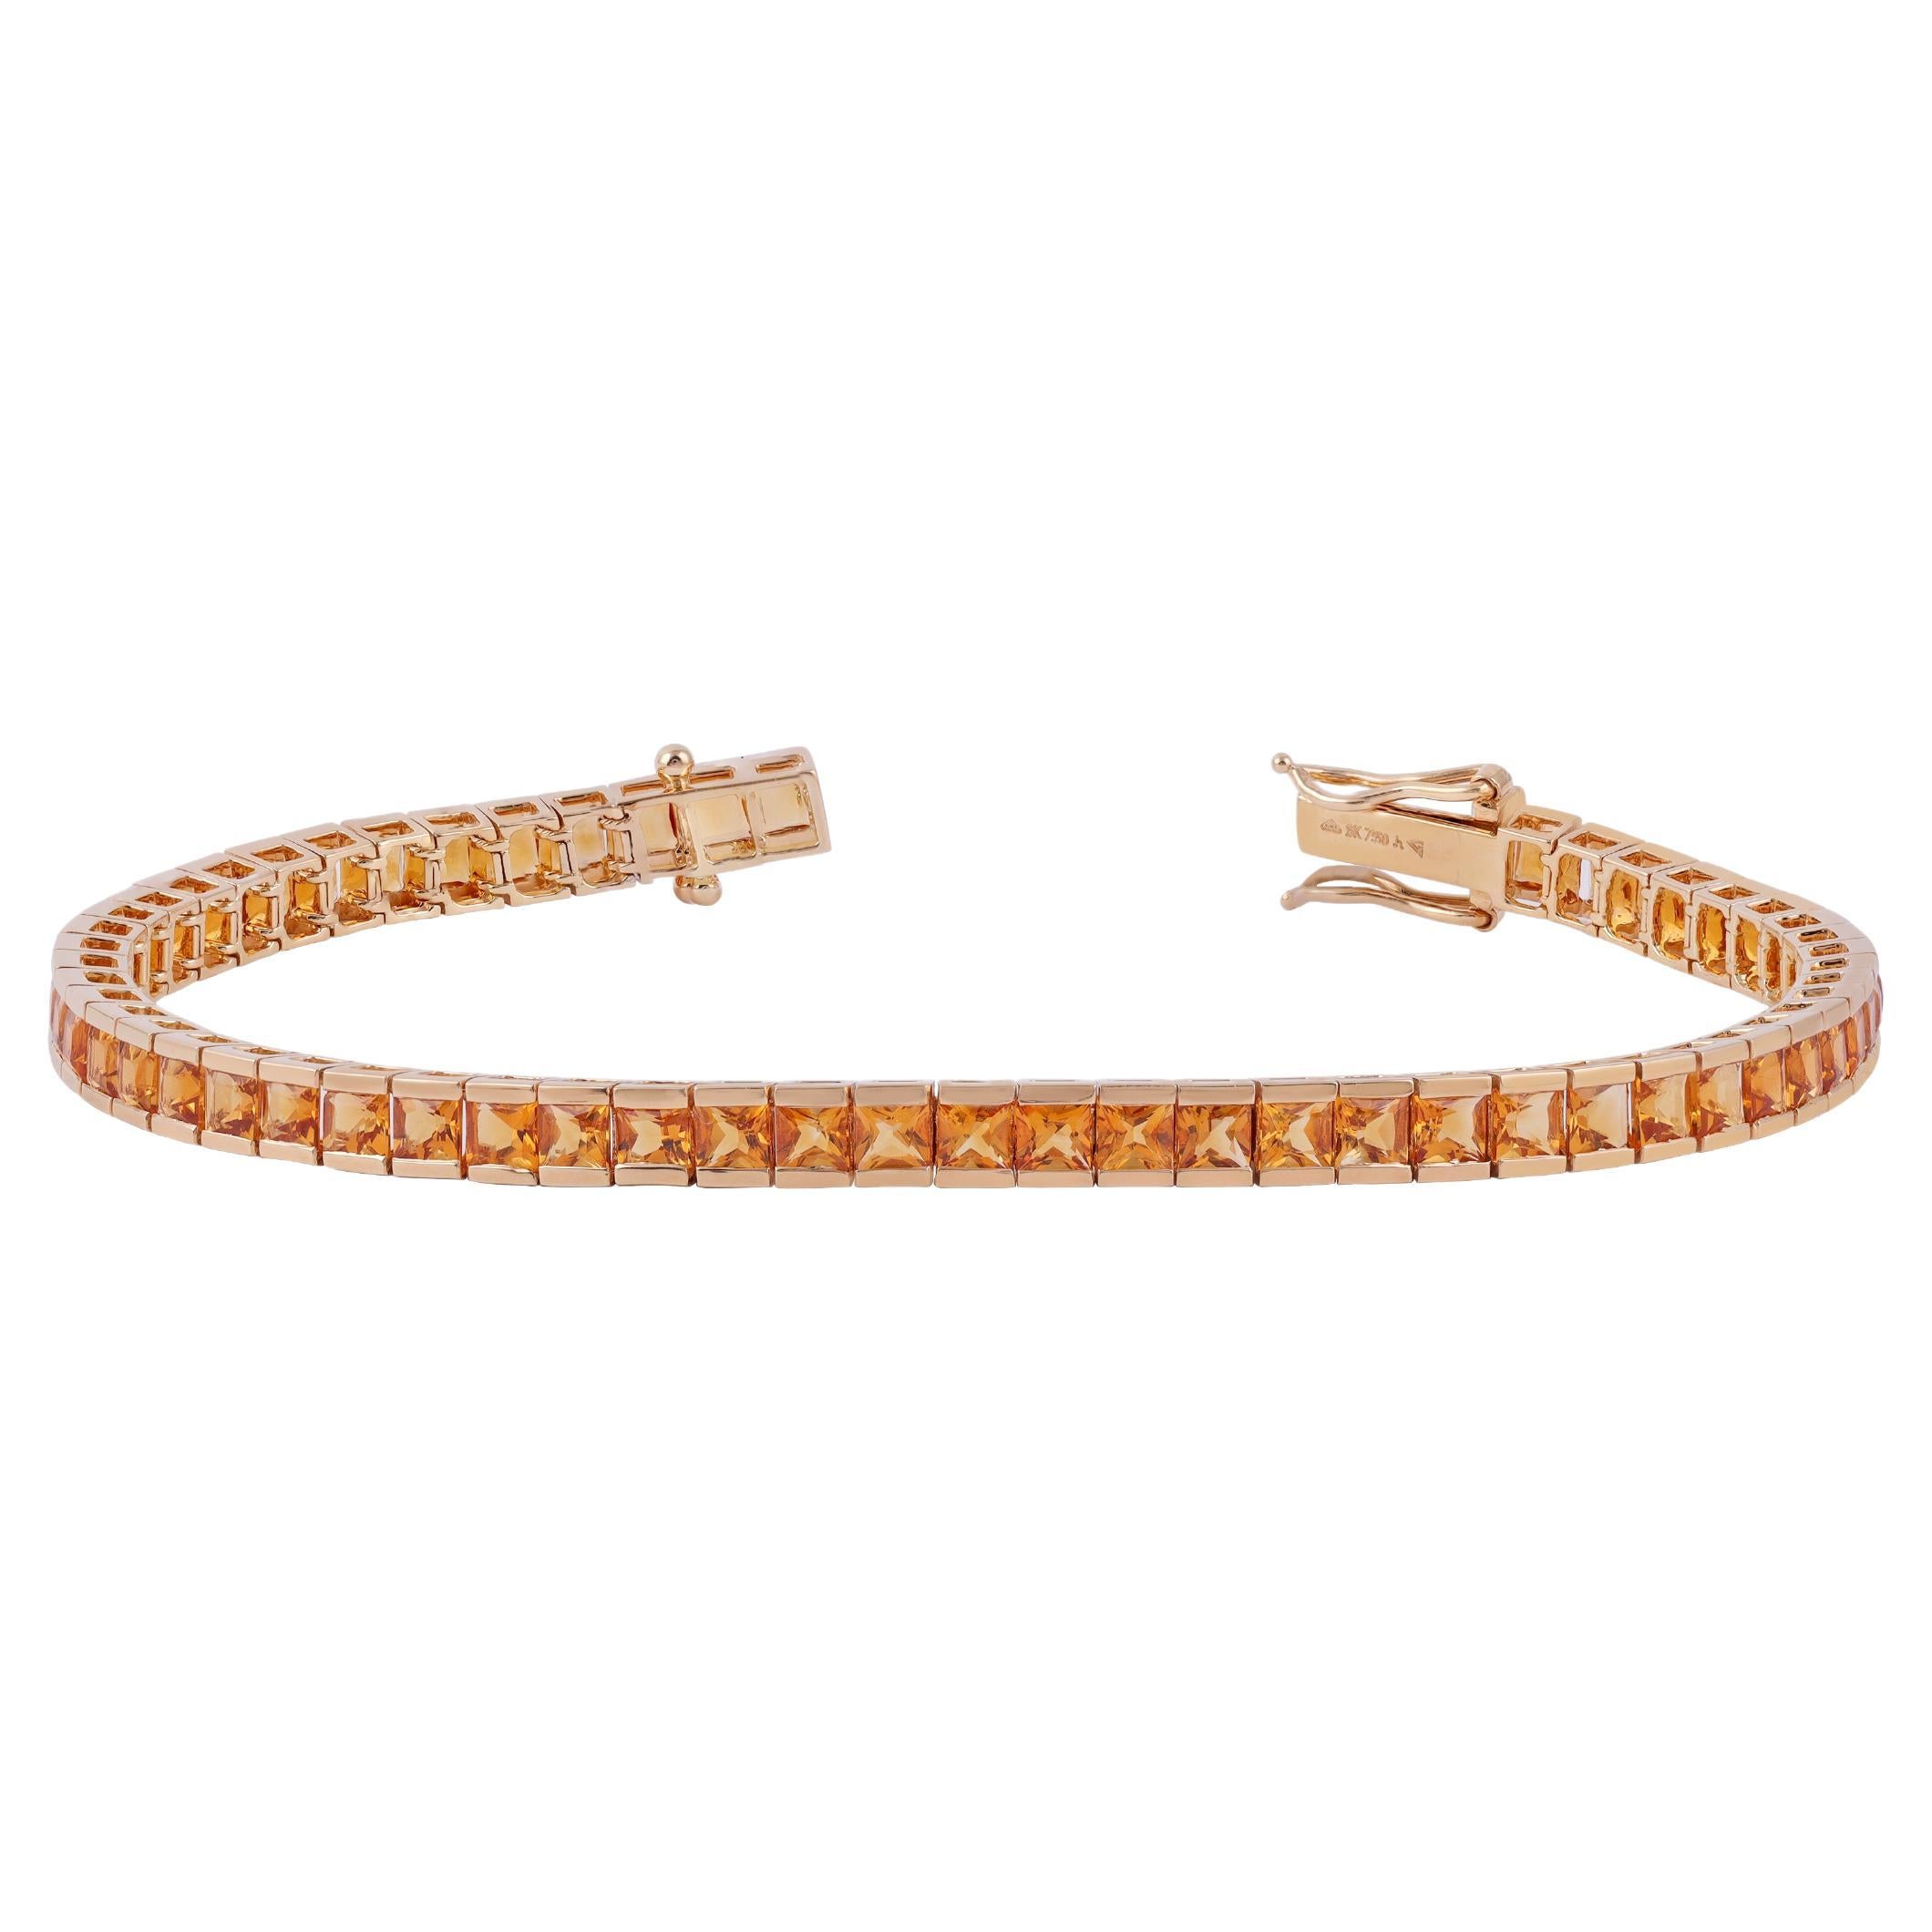 7.54 Carat Citrine Bracelet Studded in 18 Karat Gold